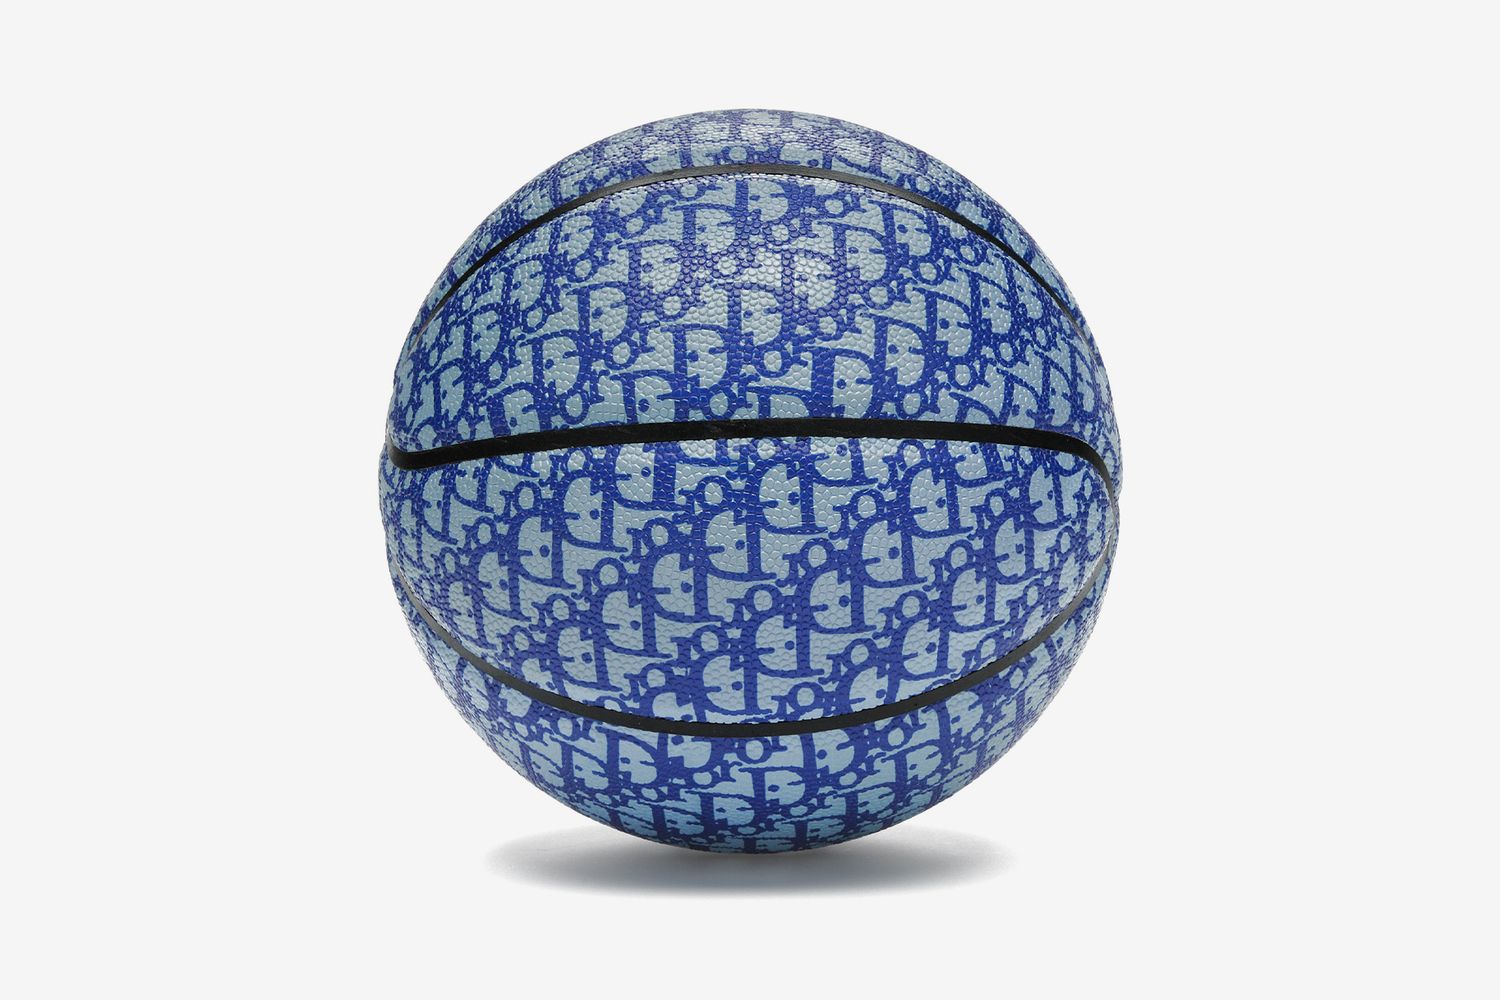 'Dior' Monogram Basketball